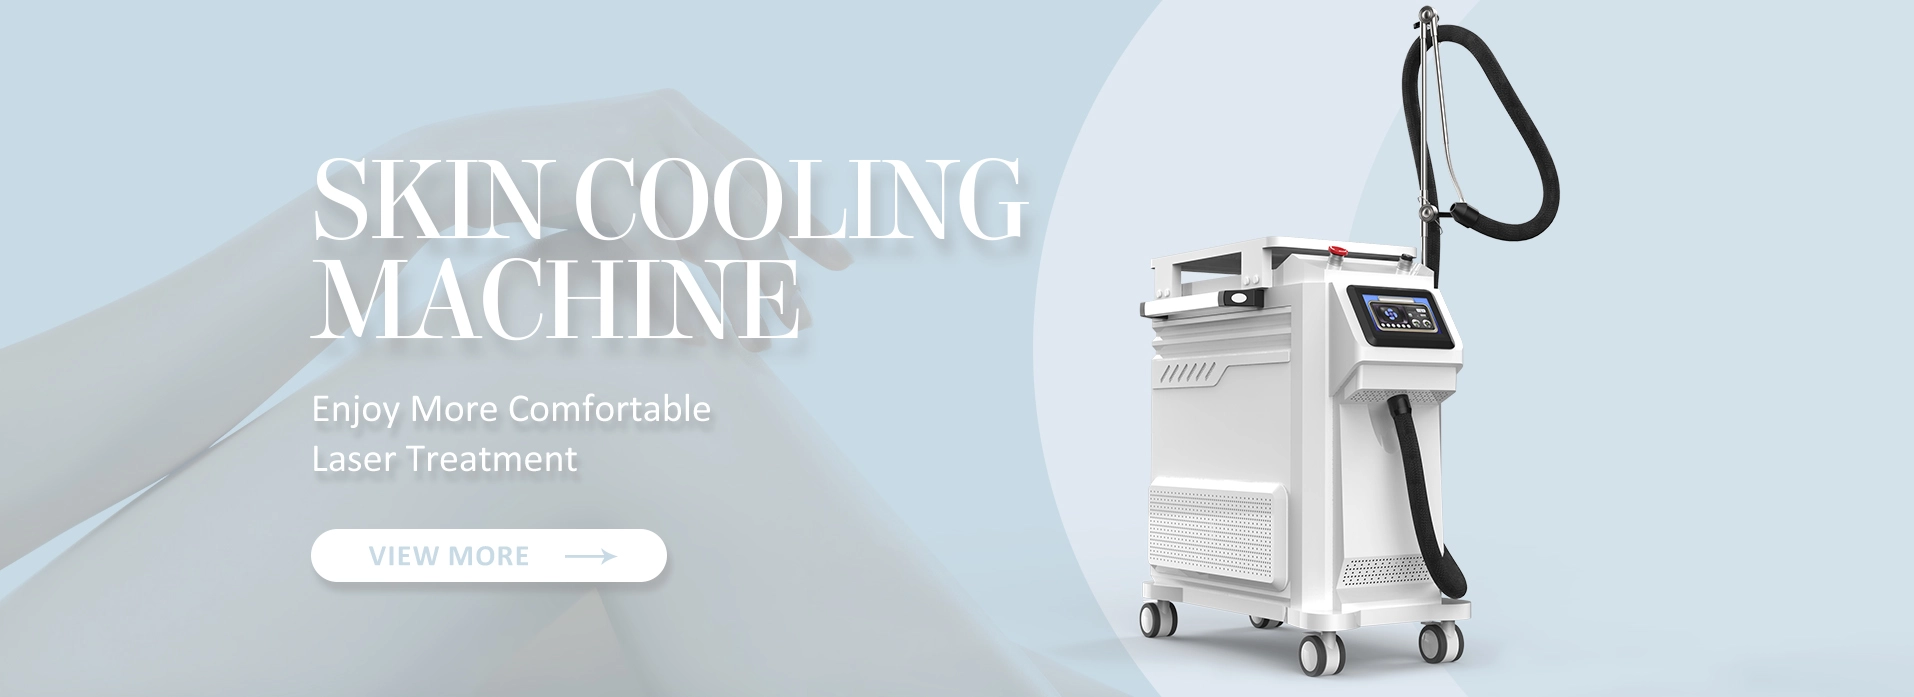 Skin Cooling Machine